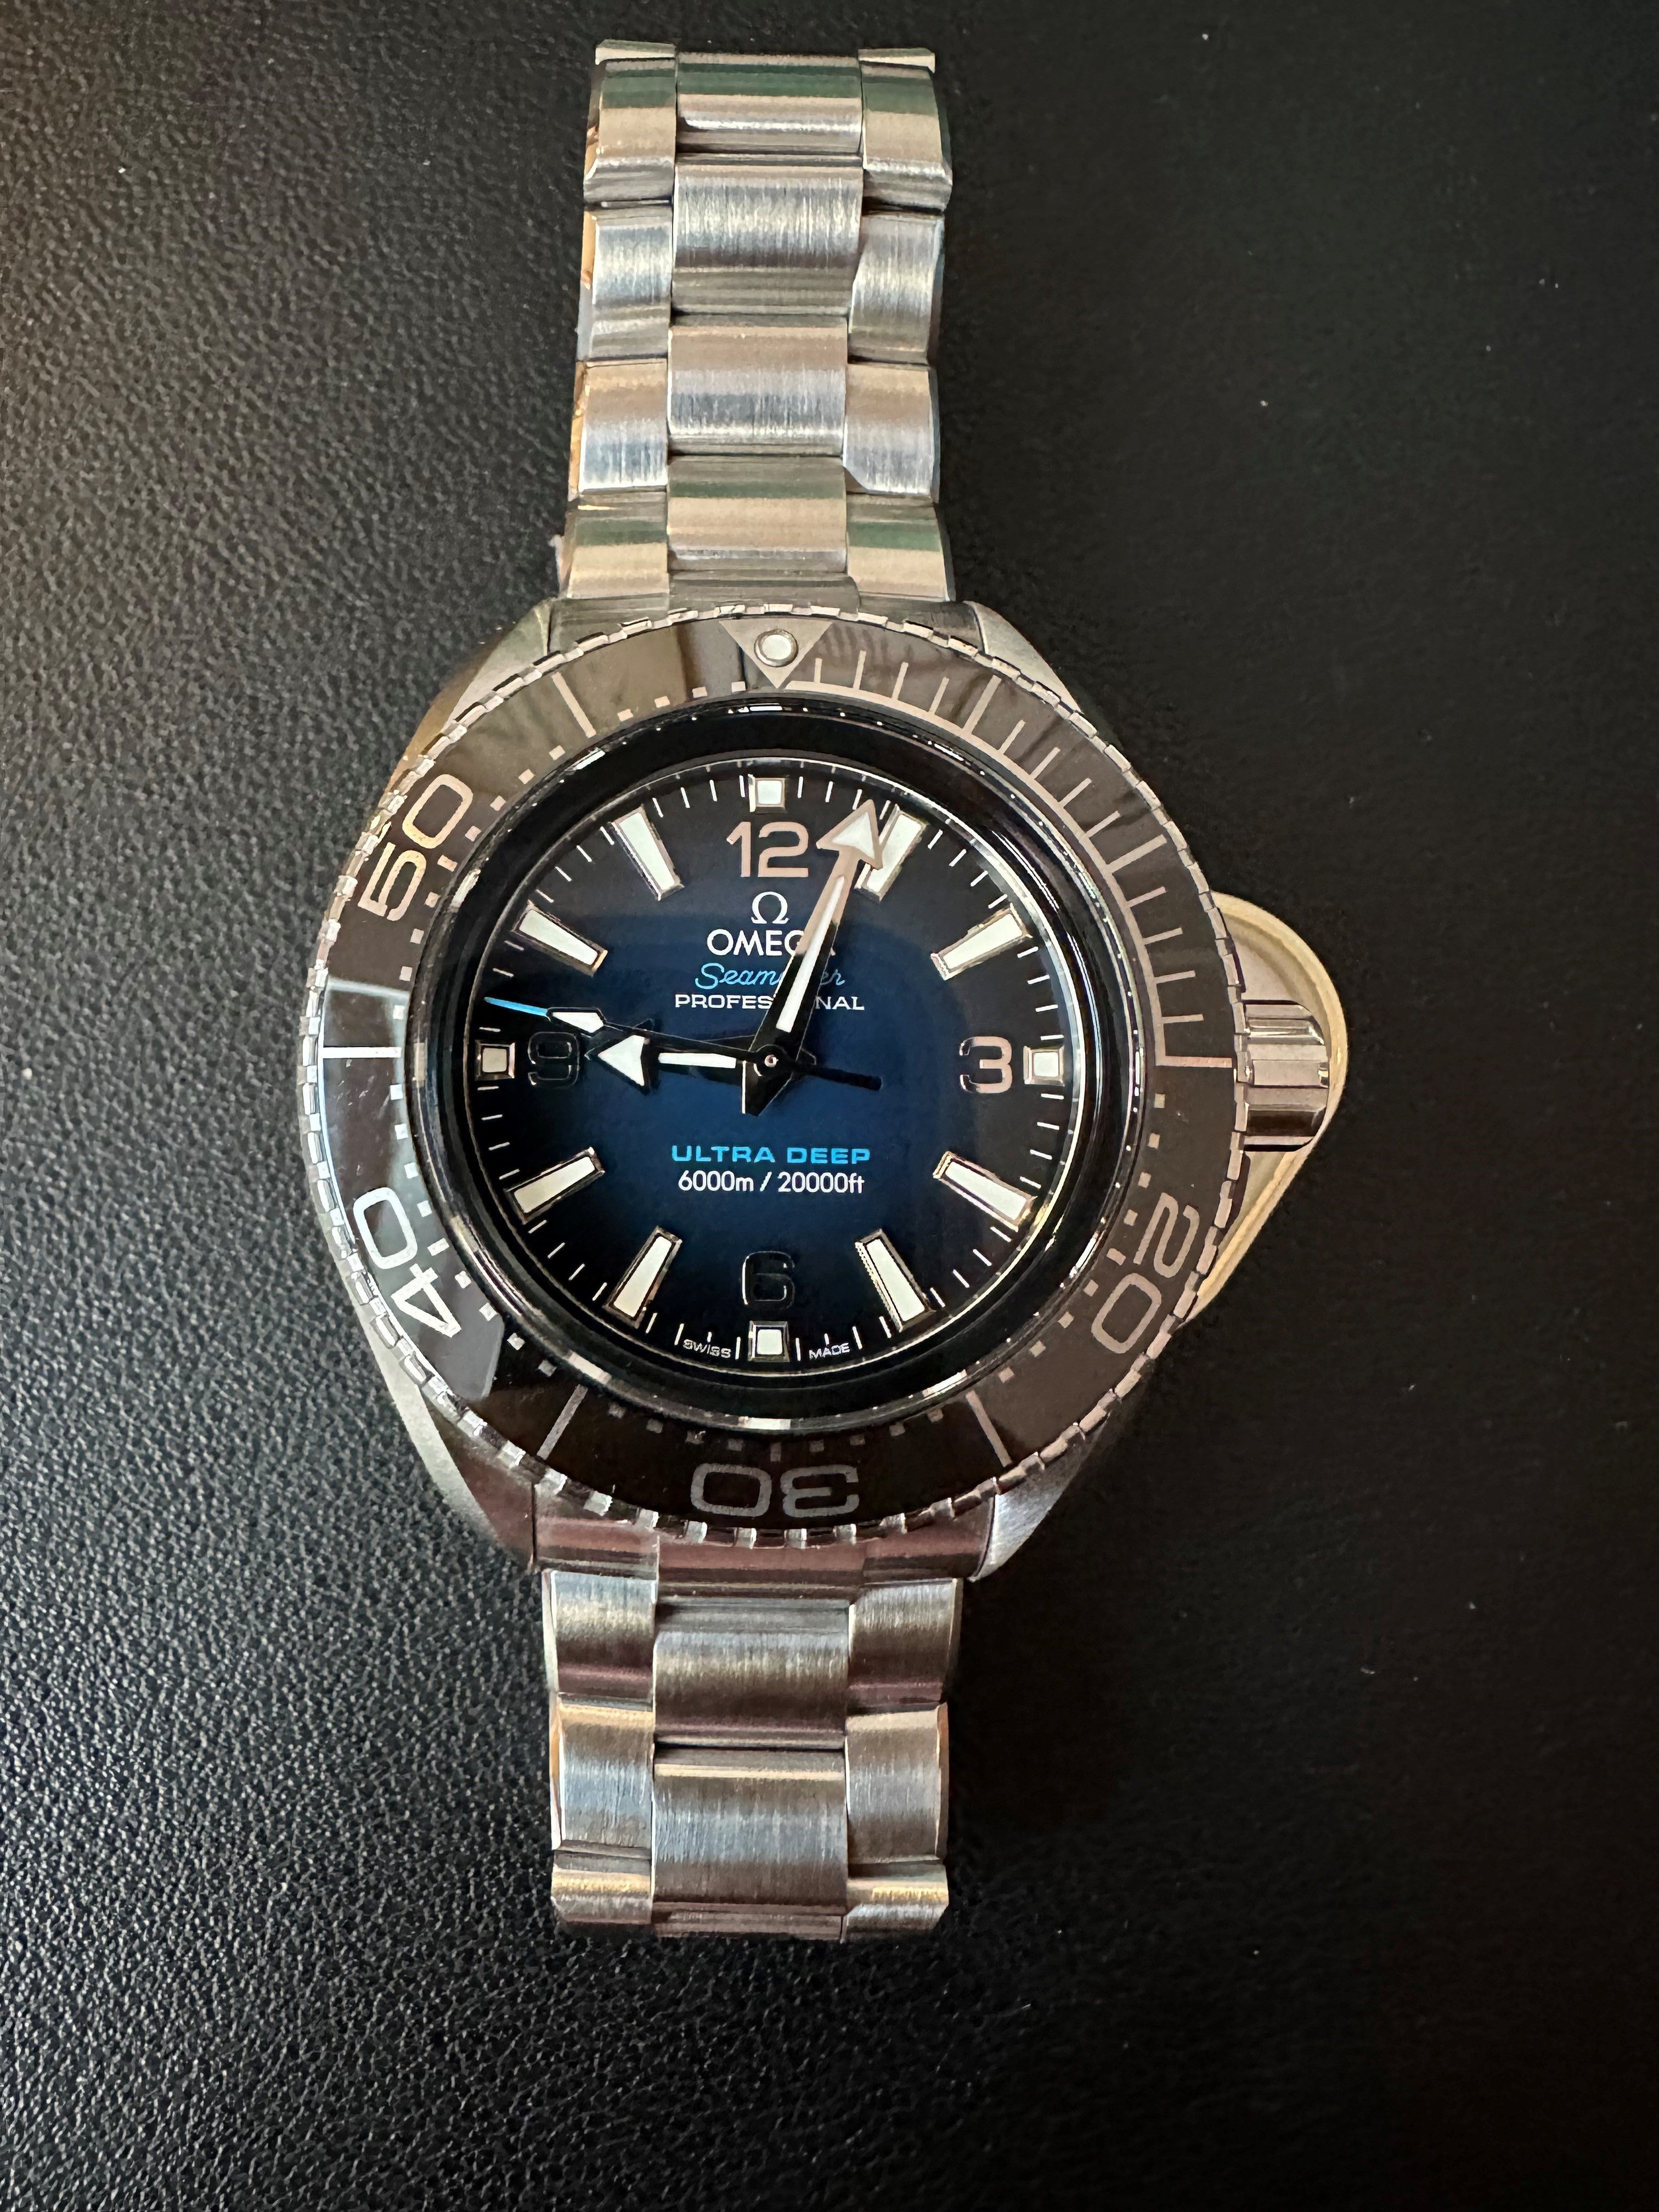 Omega Seamaster Planet Ocean 6000m, Men's Dive Watch, Harley's Time LLC